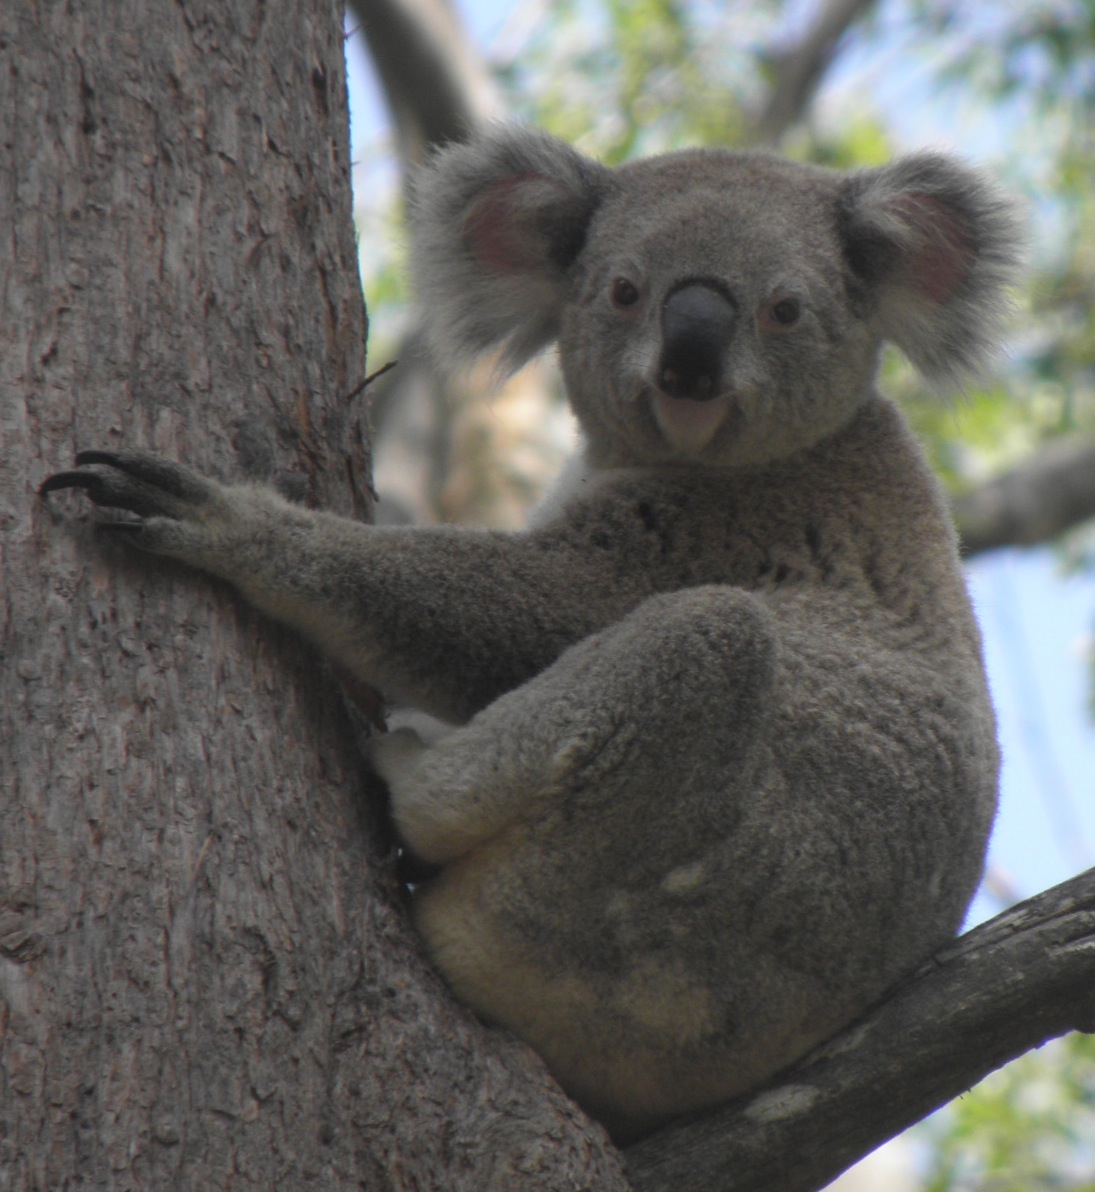 wildlife tourism in australia